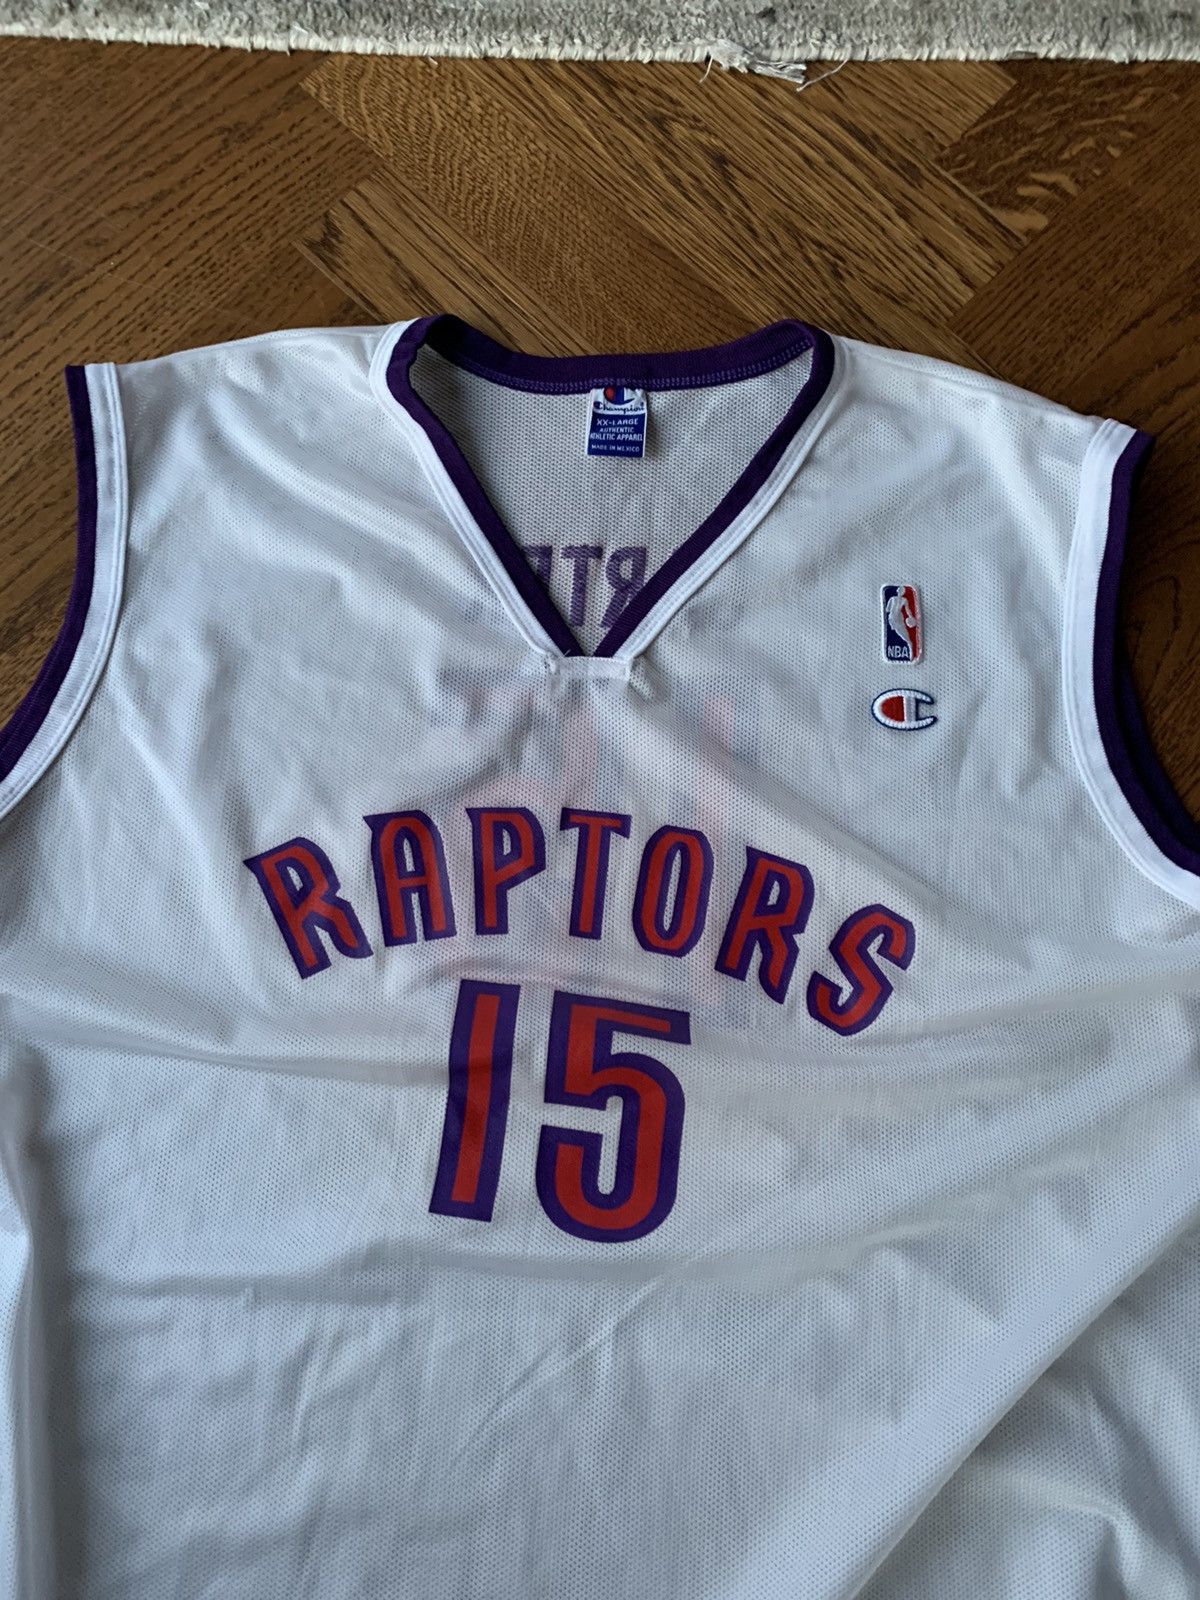 Vintage 90s Vince Carter Toronto Raptors Basketball Jersey Vintage Size US XXL / EU 58 / 5 - 4 Thumbnail